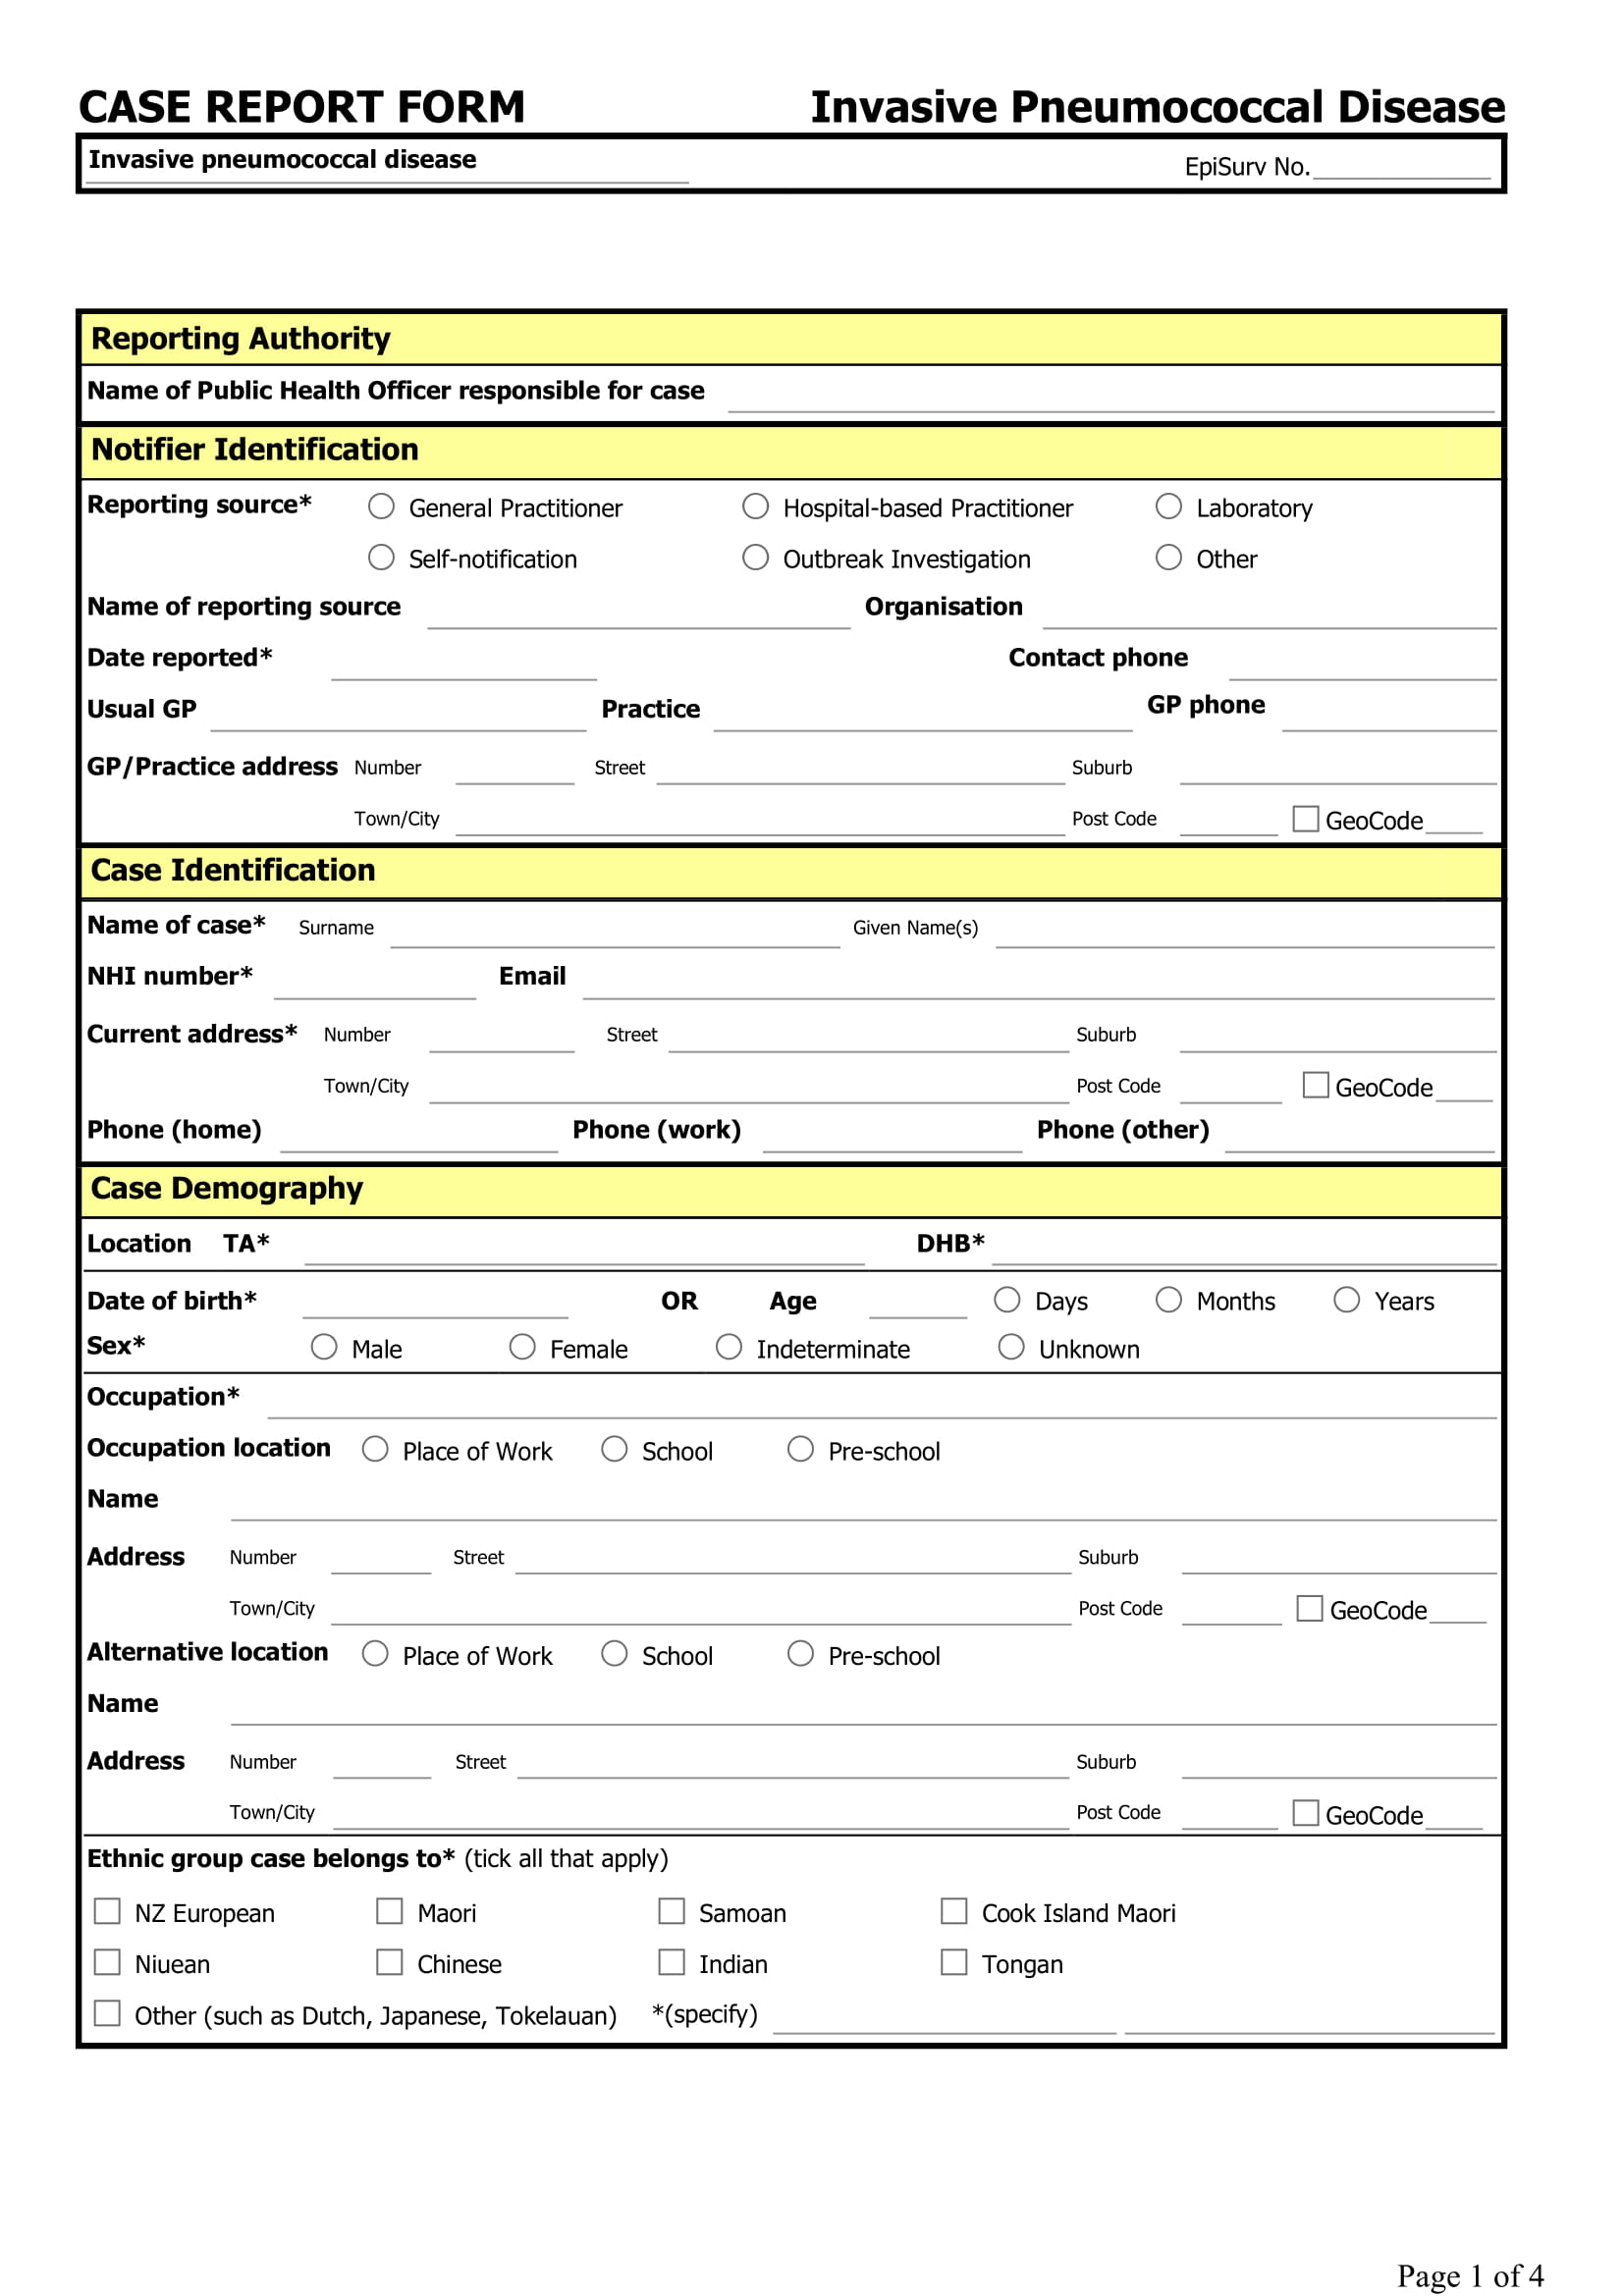 invasive case report form sample 1